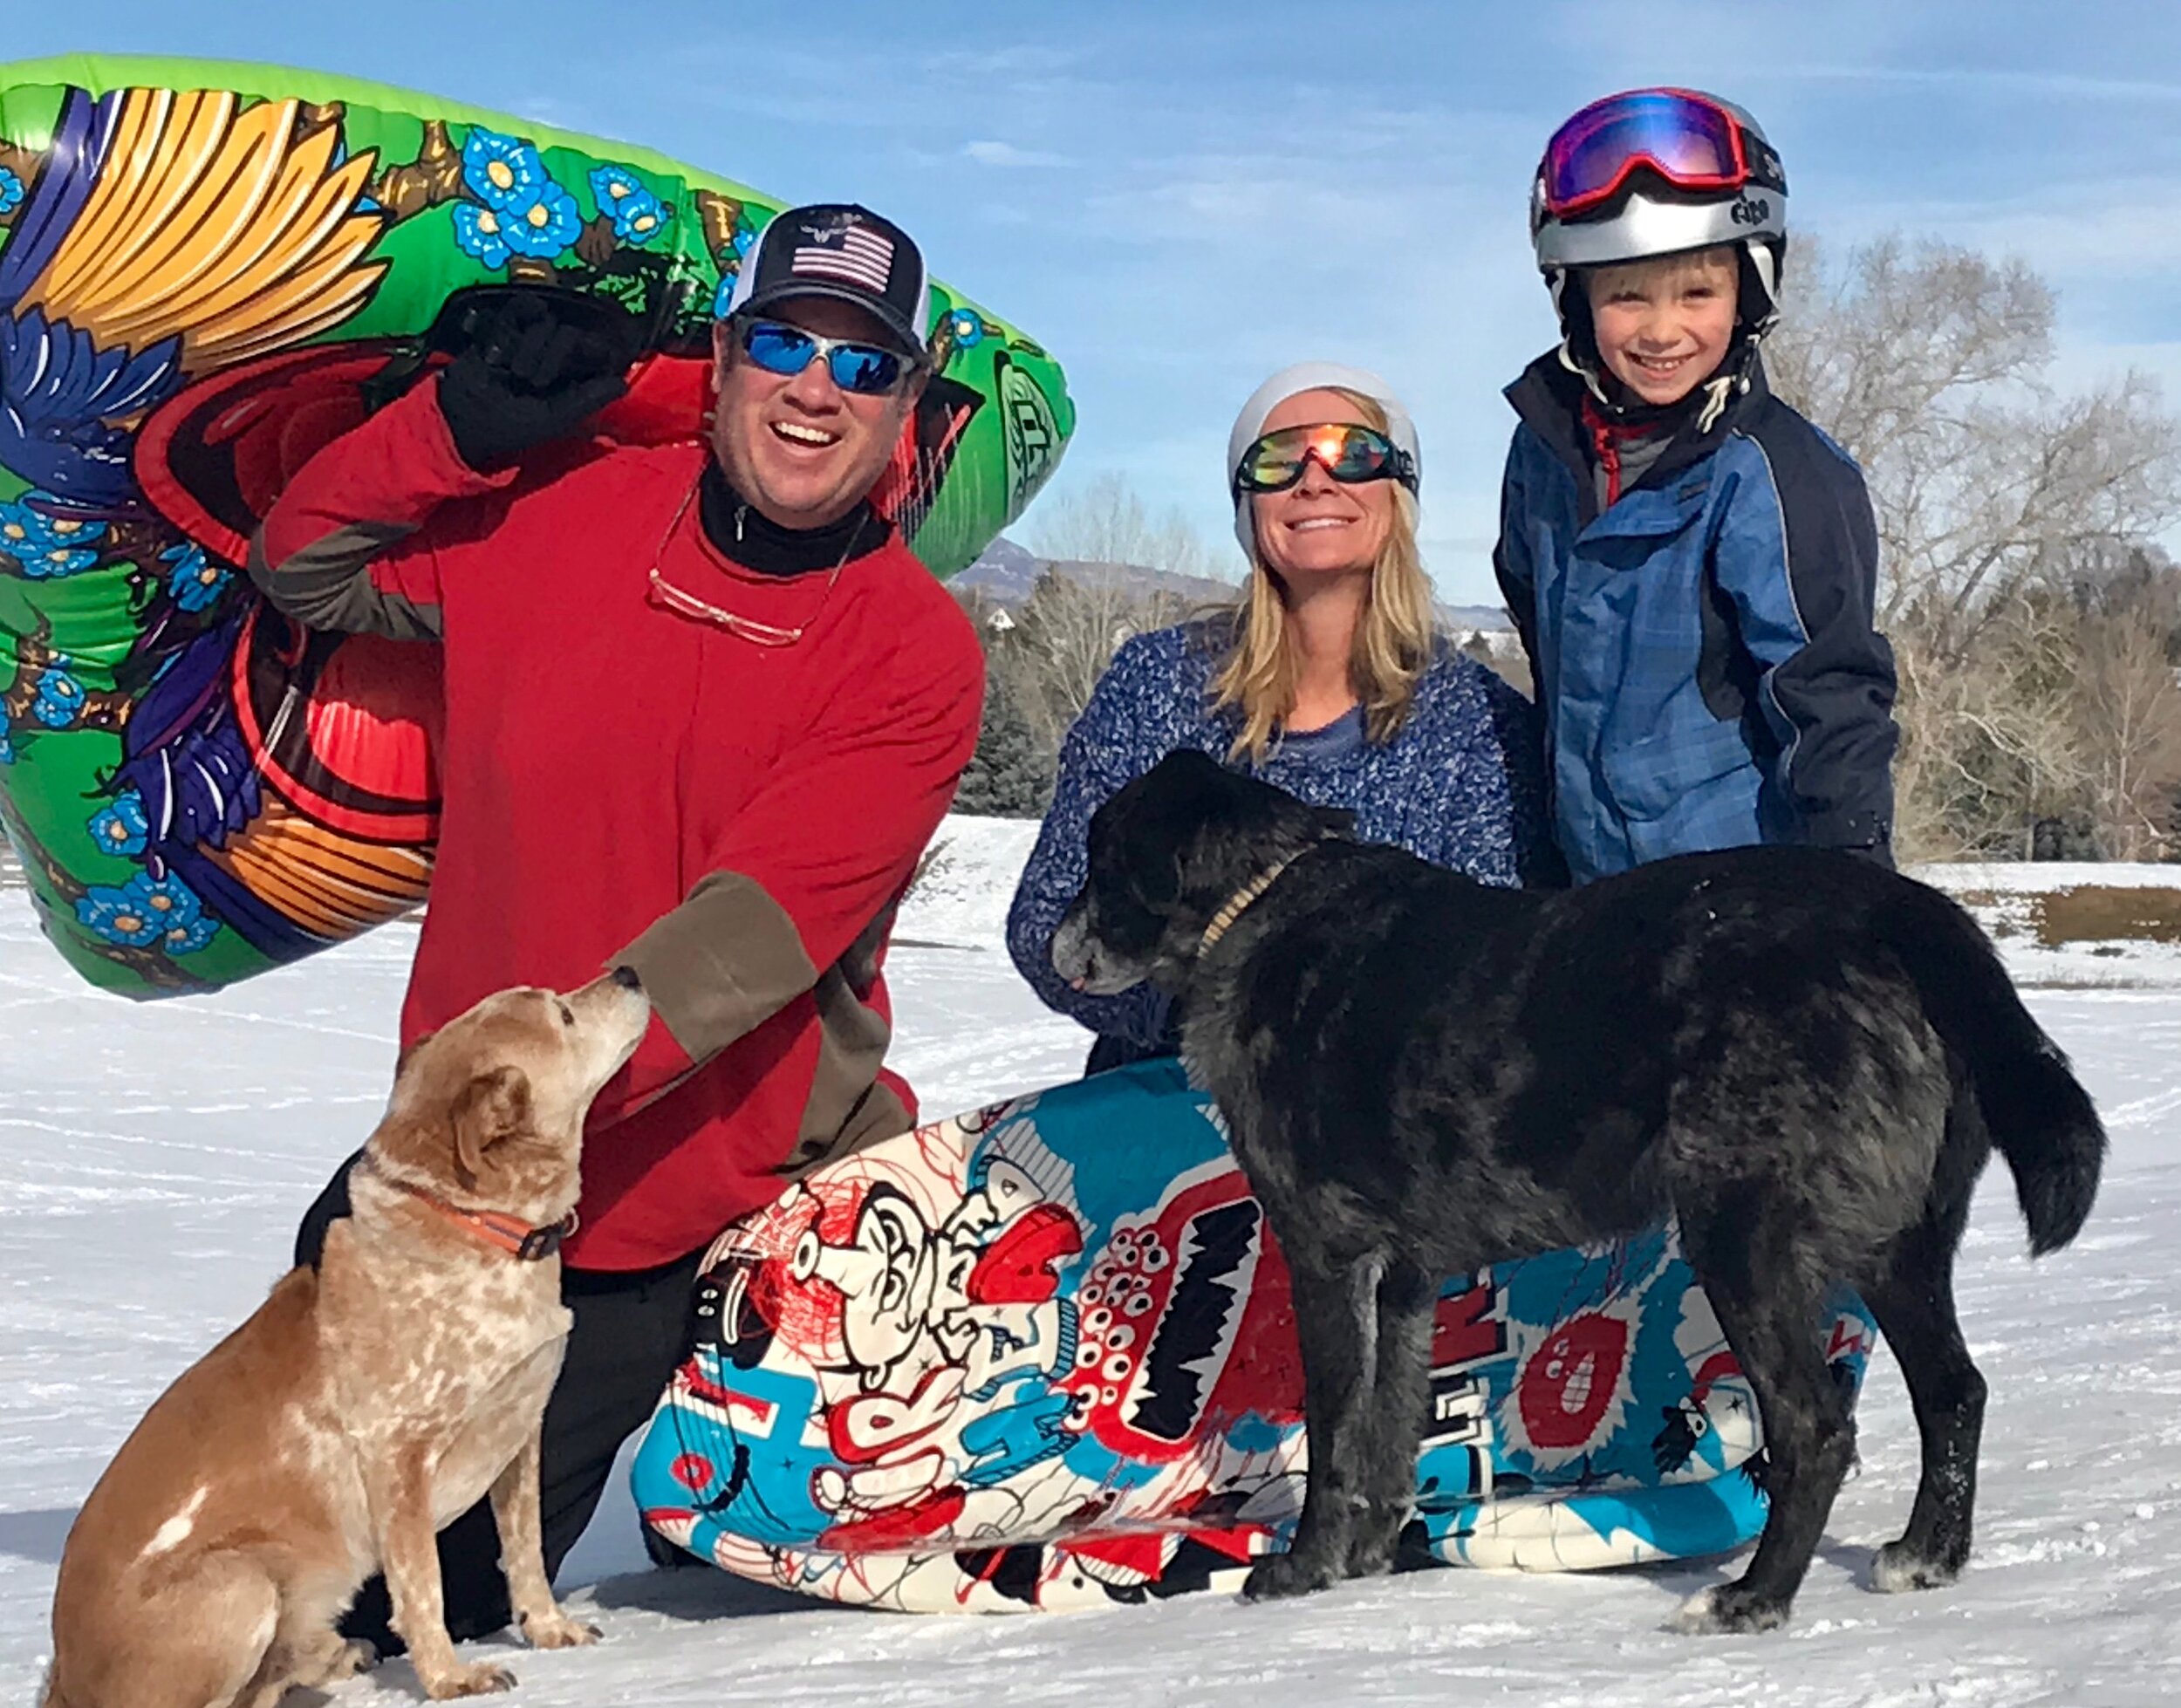 Scott Bayens snowboarding in Colorado